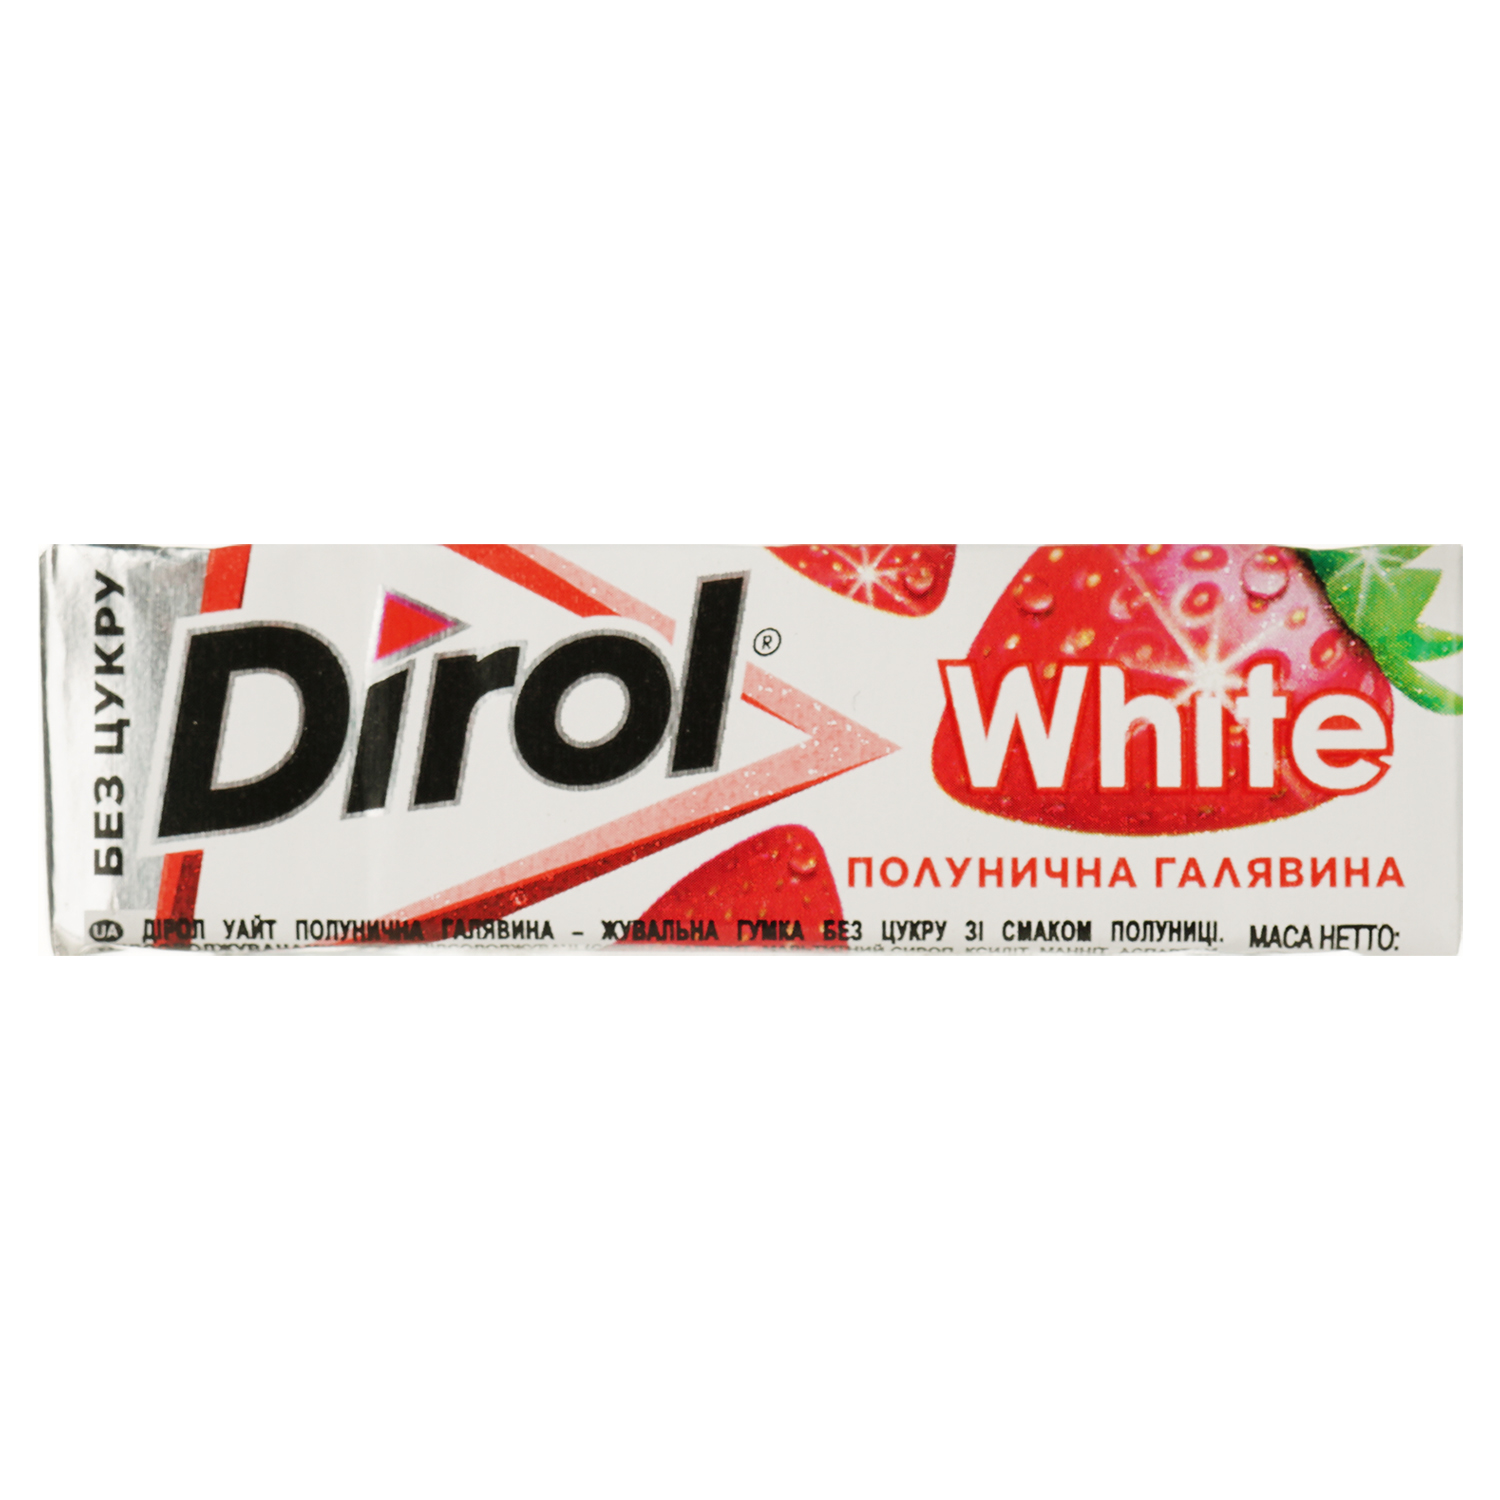 Гумка жувальна Dirol White Полуниця, 14 г (694100) - фото 1